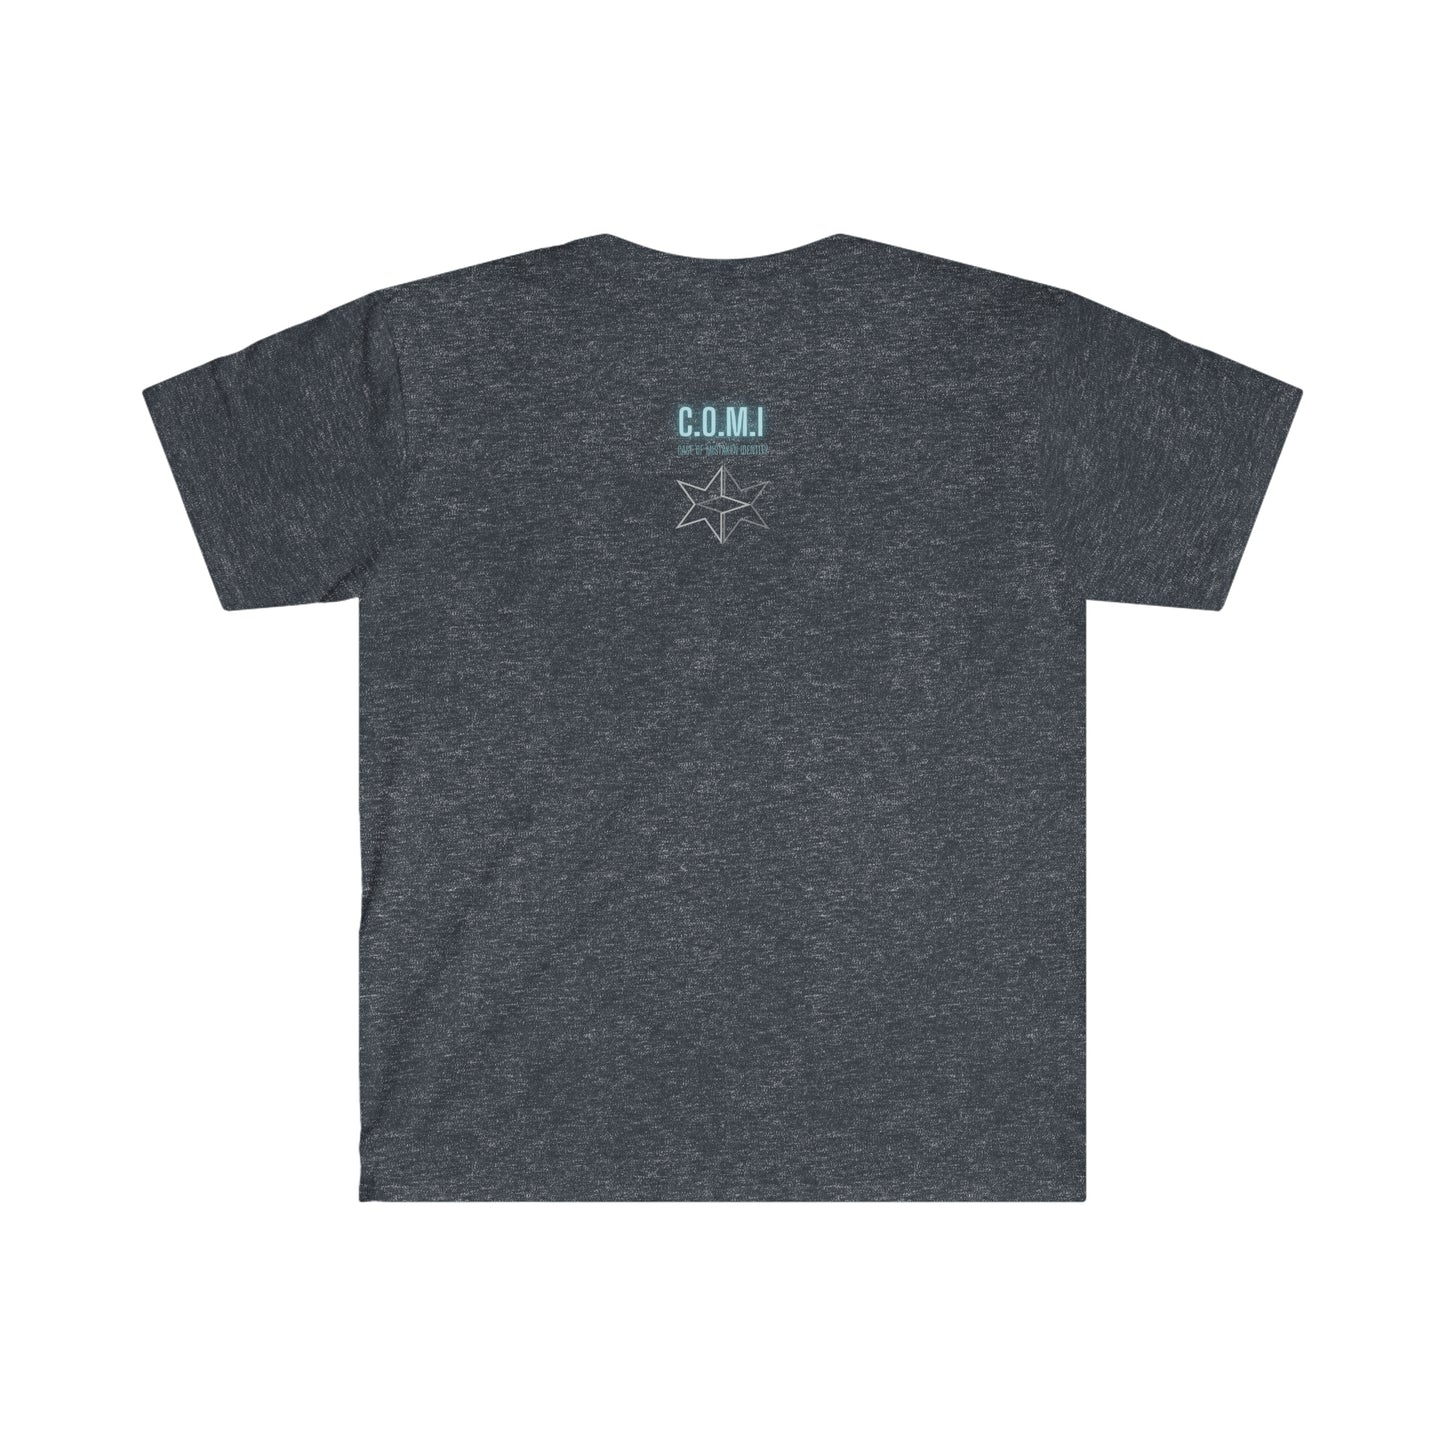 Delorean - Unisex Softstyle T-Shirt